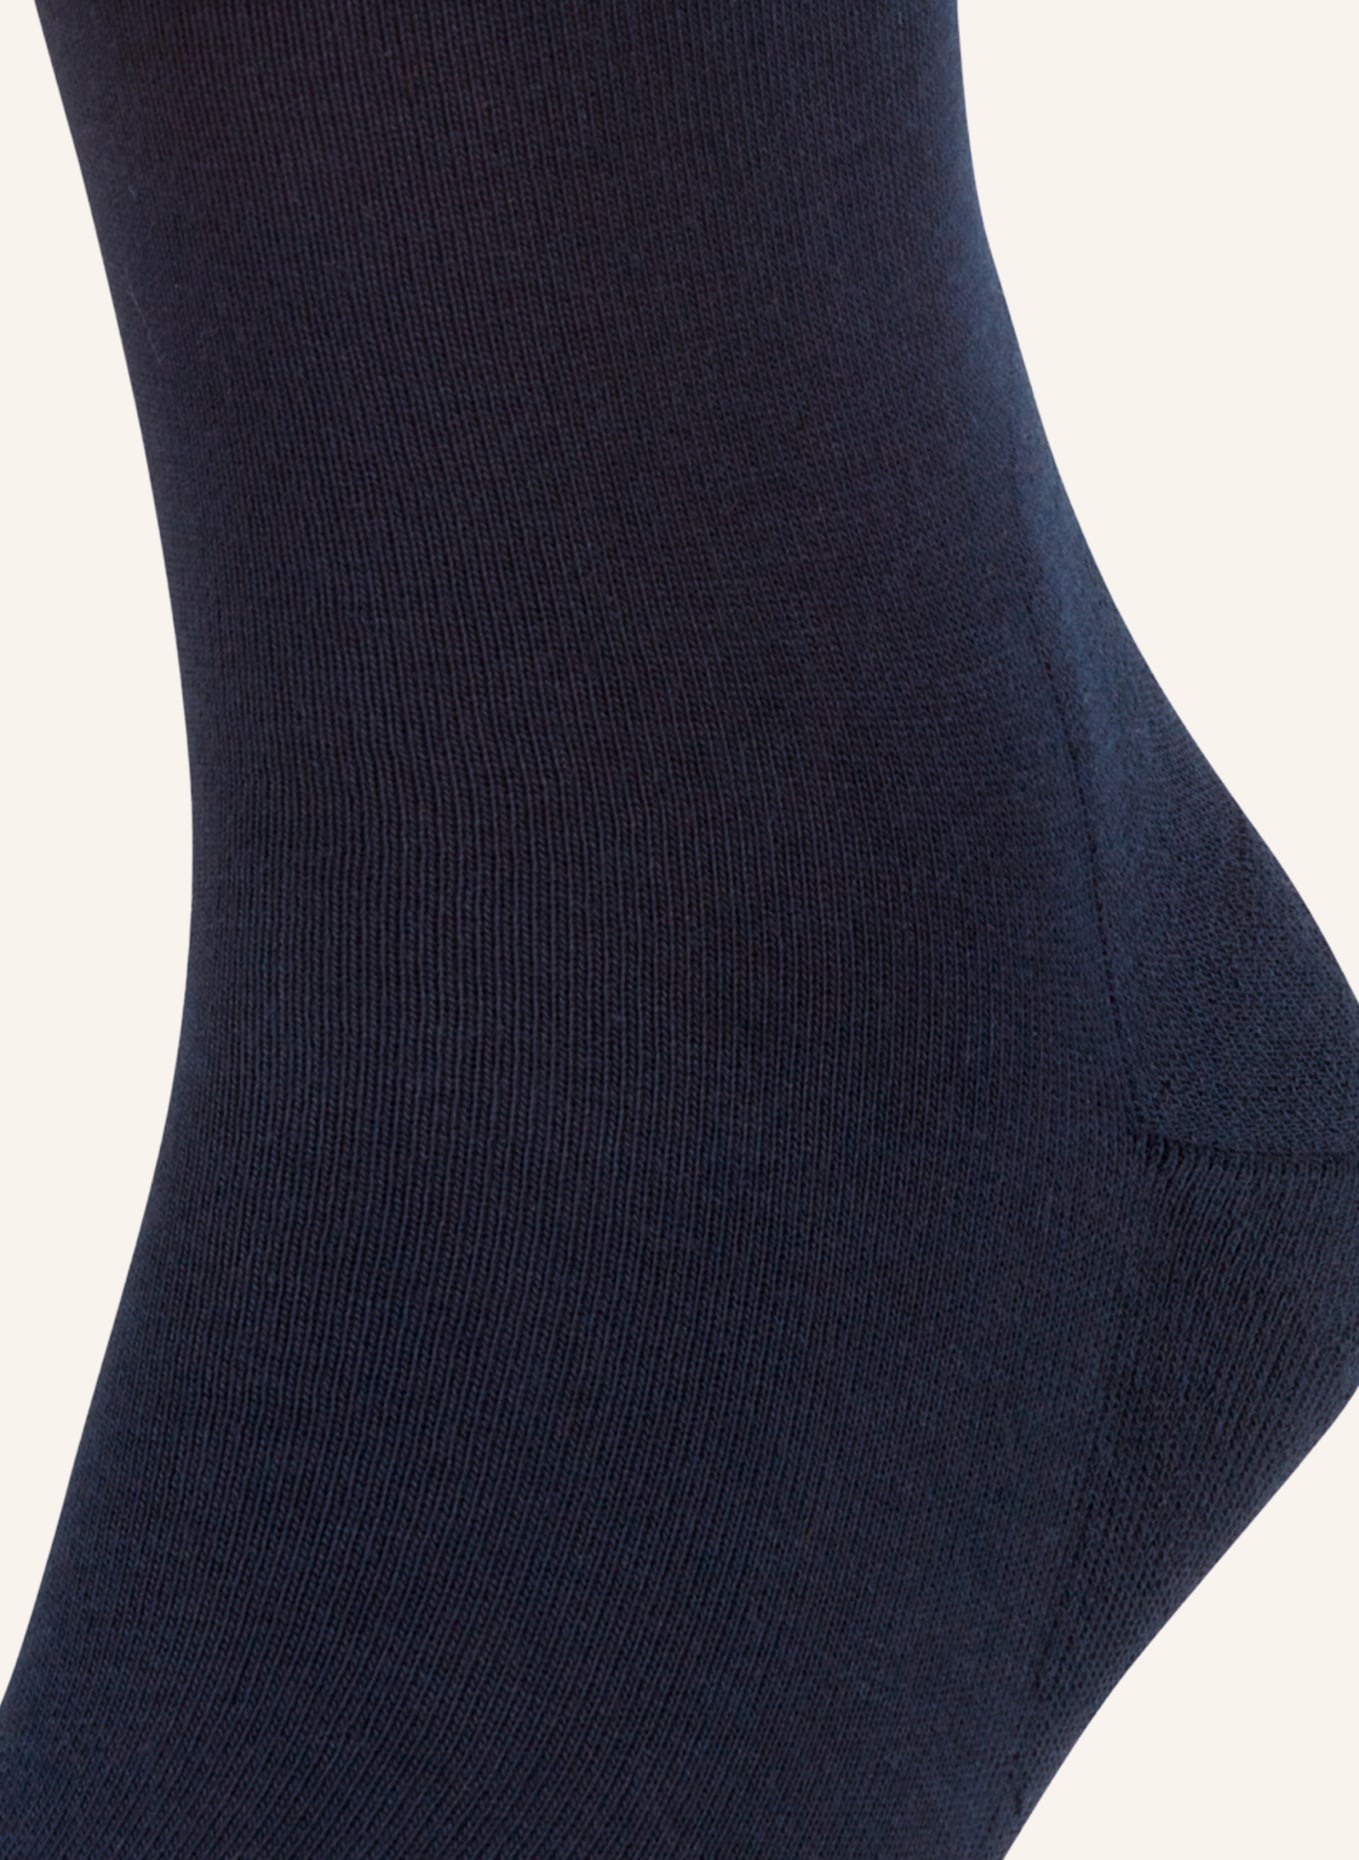 FALKE Socken RUN ERGO, Farbe: 6120 MARINE (Bild 3)